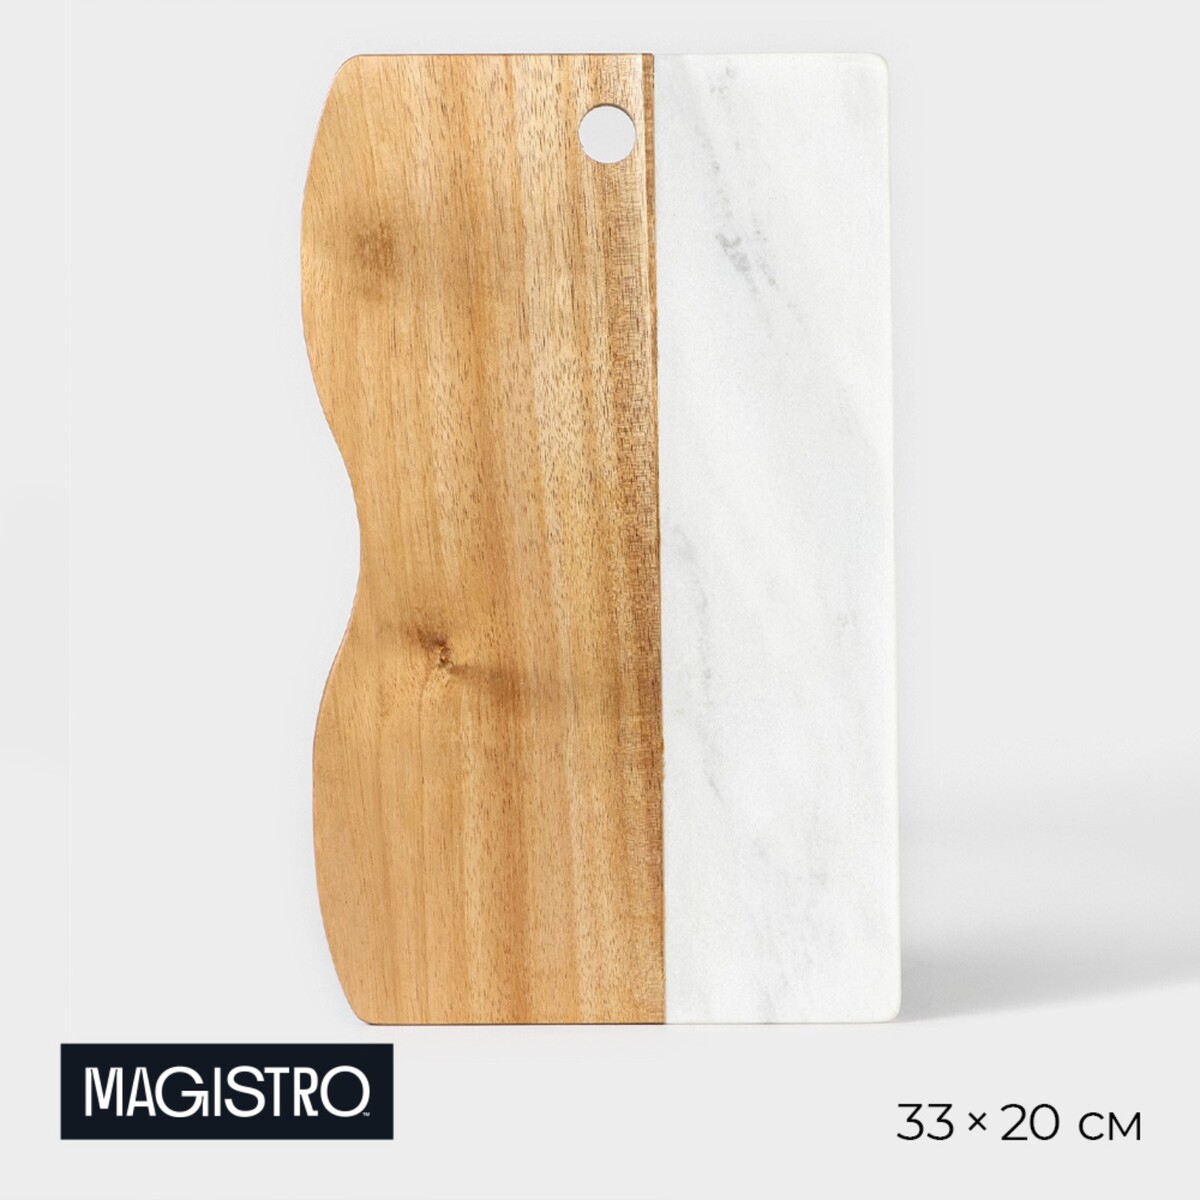 Доска для подачи magistro forest dream, 33×20 см, акация, мрамор доска для подачи magistro forest dream 33×20 см акация мрамор